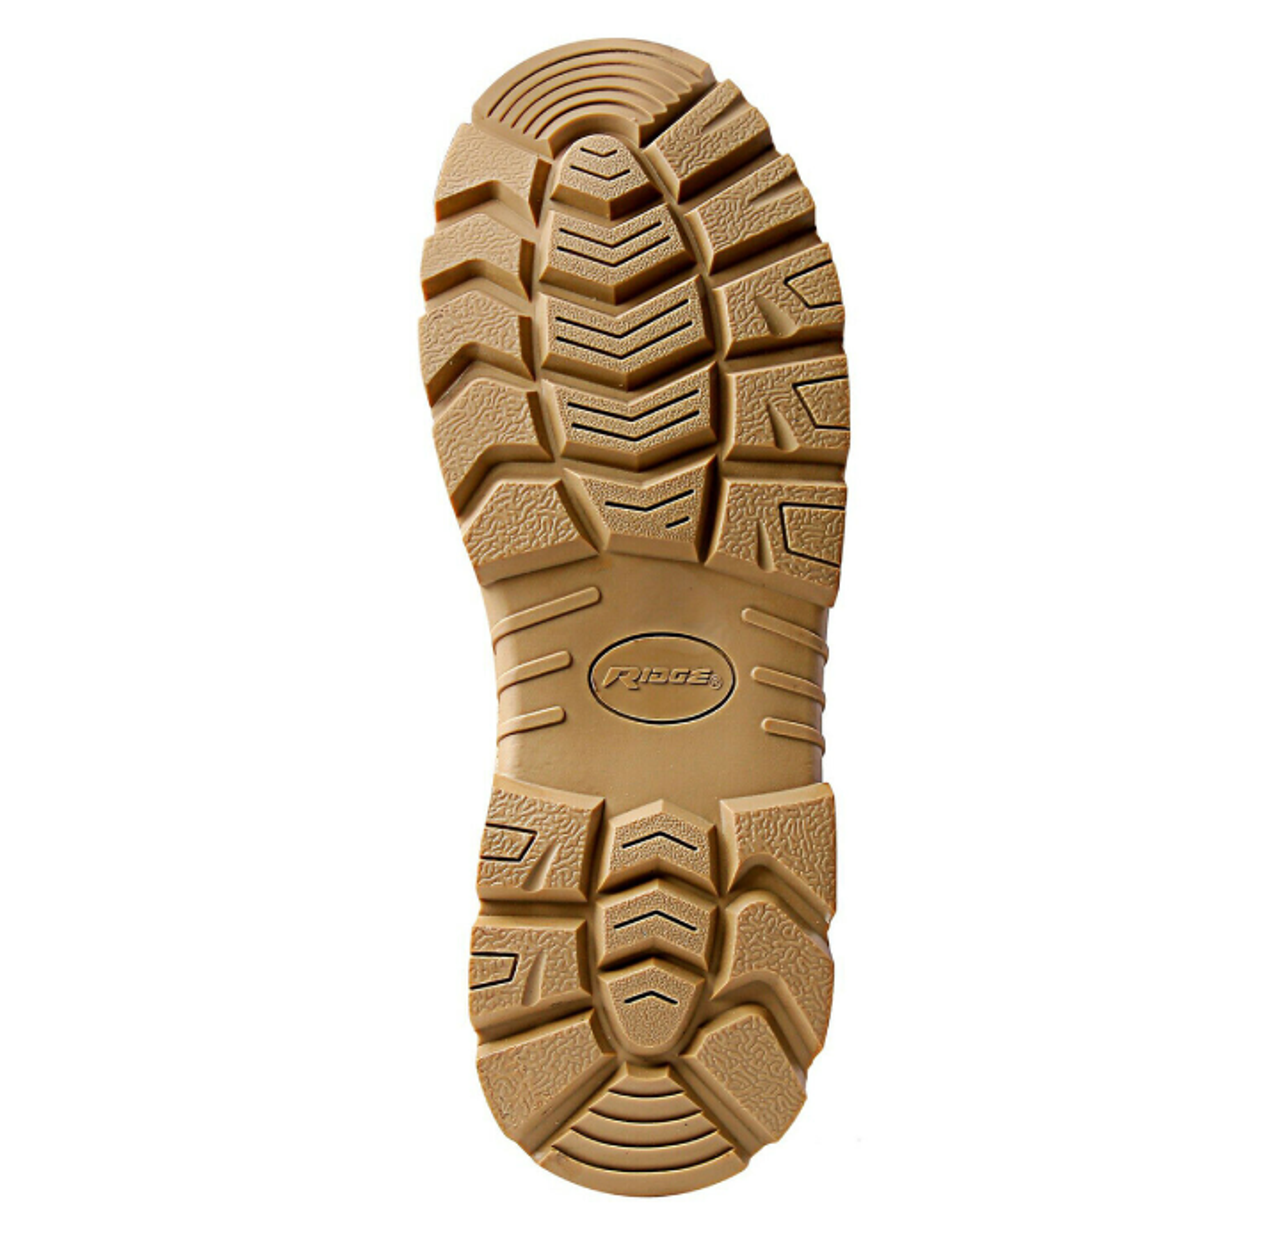 Ridge Footwear Men’s Dura-Max Side Zipper 8” Tactical Boots product image